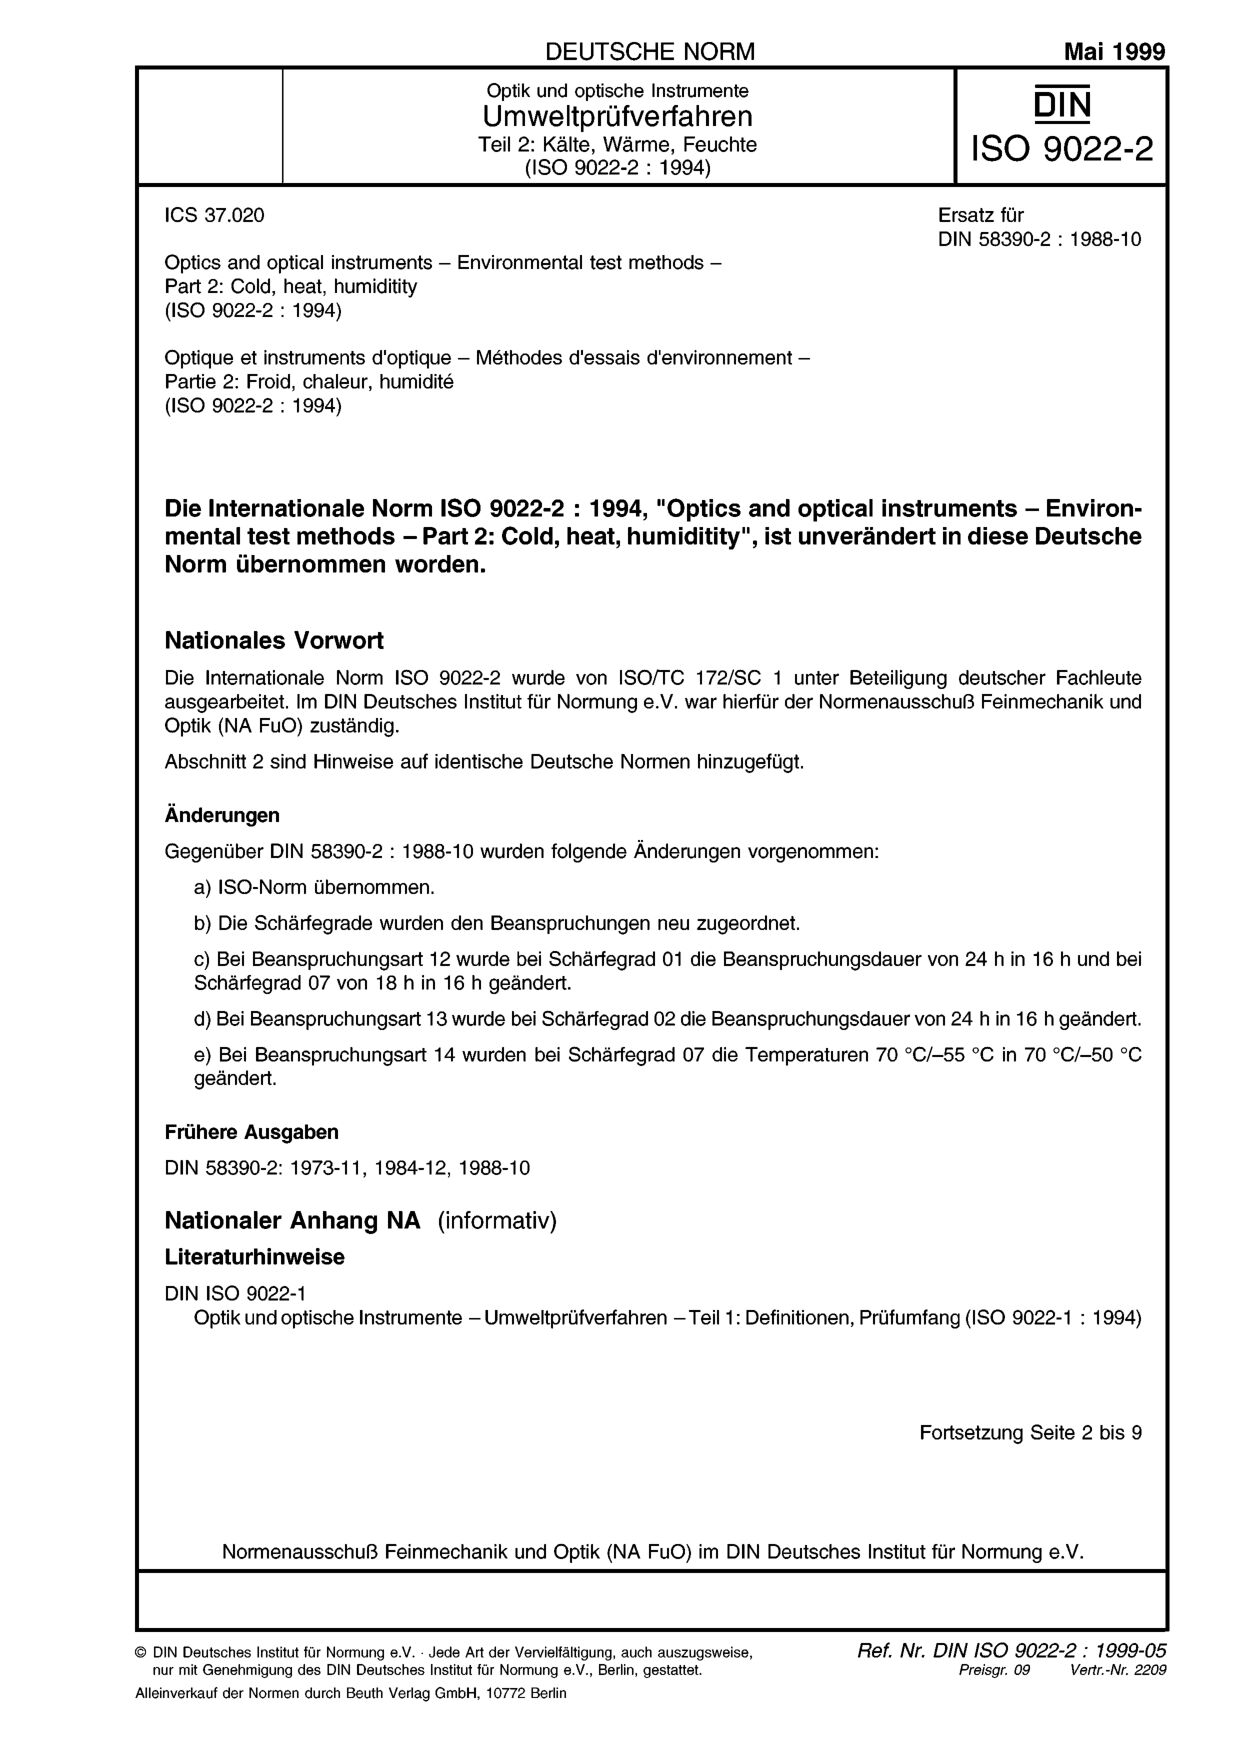 DIN ISO 9022-2:1999-05